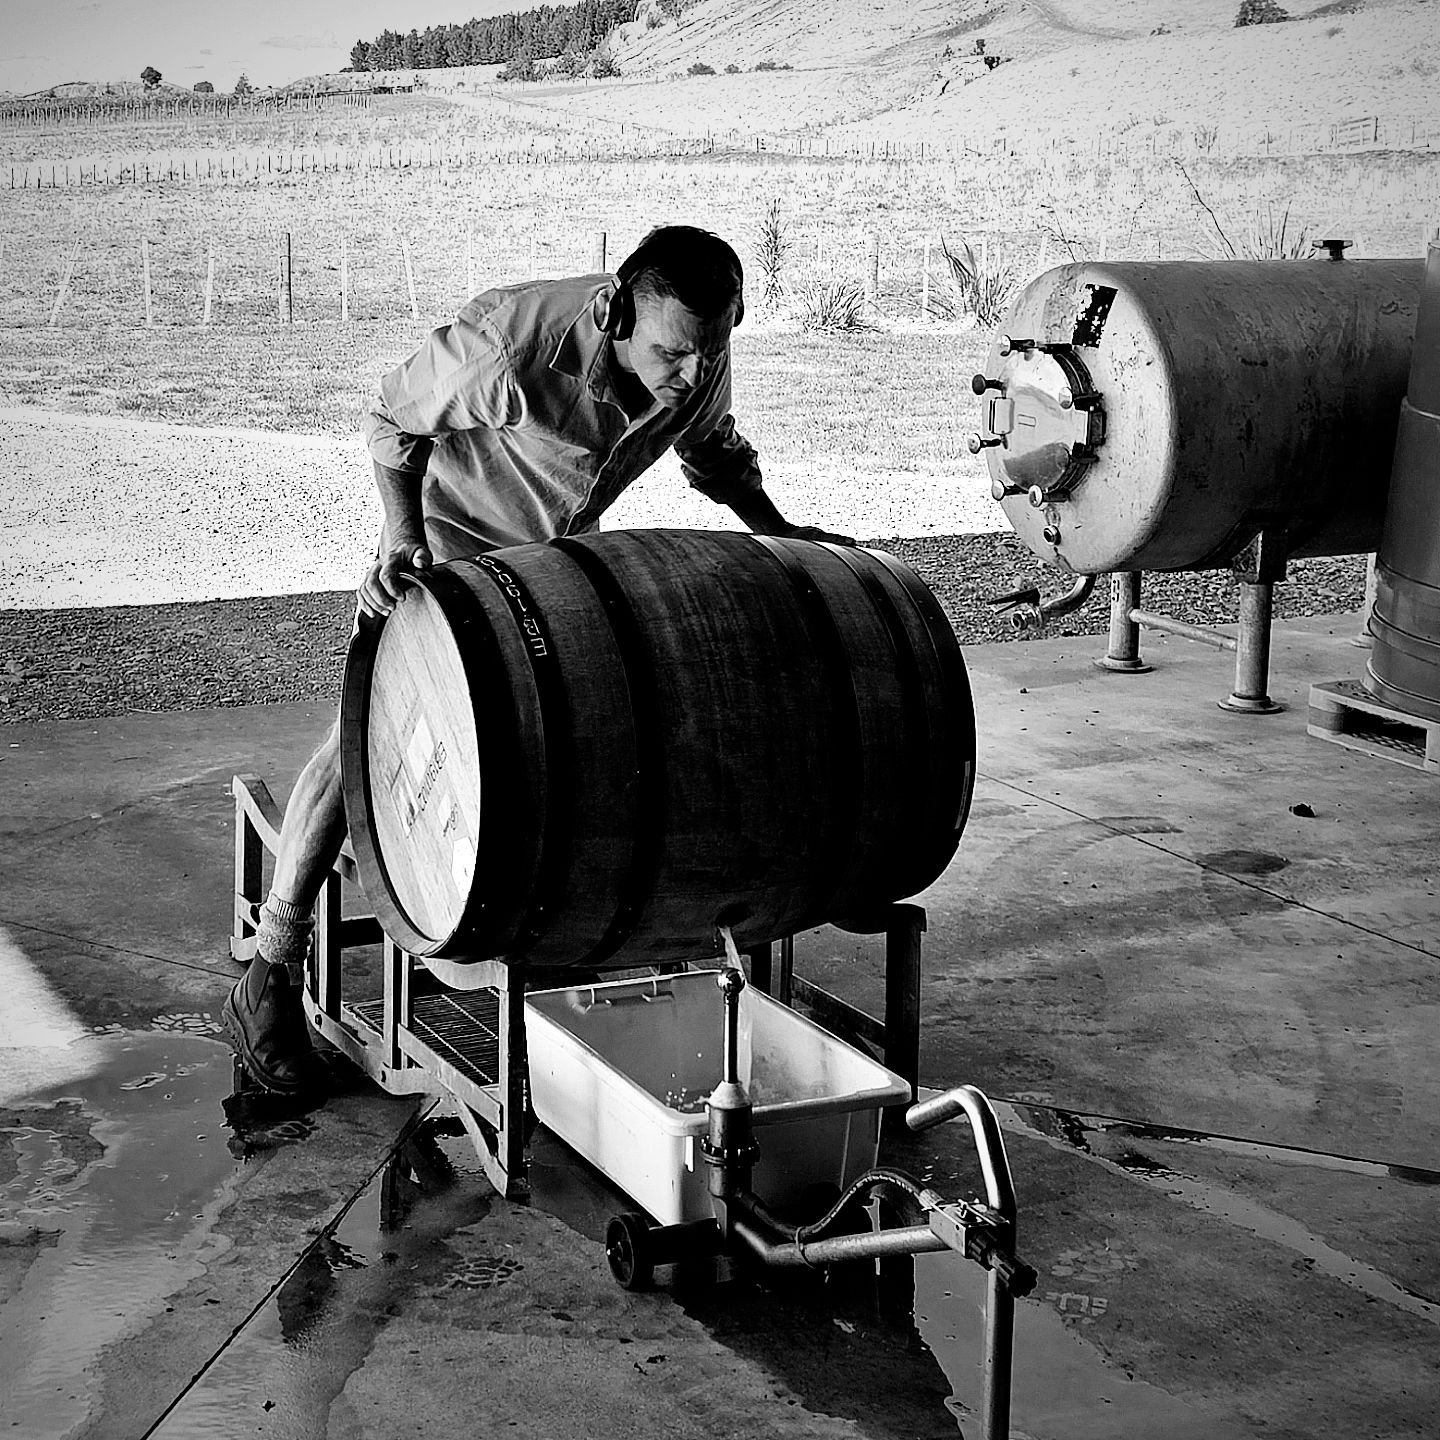 Preparing barrels for our 2024 Syrah 

#barrels #easthope #easthopefamilywinegrowers #winery #barrelwork #cellar #vintage #nzwine #nzv24 #rod #home #finewine #hawkesbaywine #hbwine #winery #family #2024 #Syrah